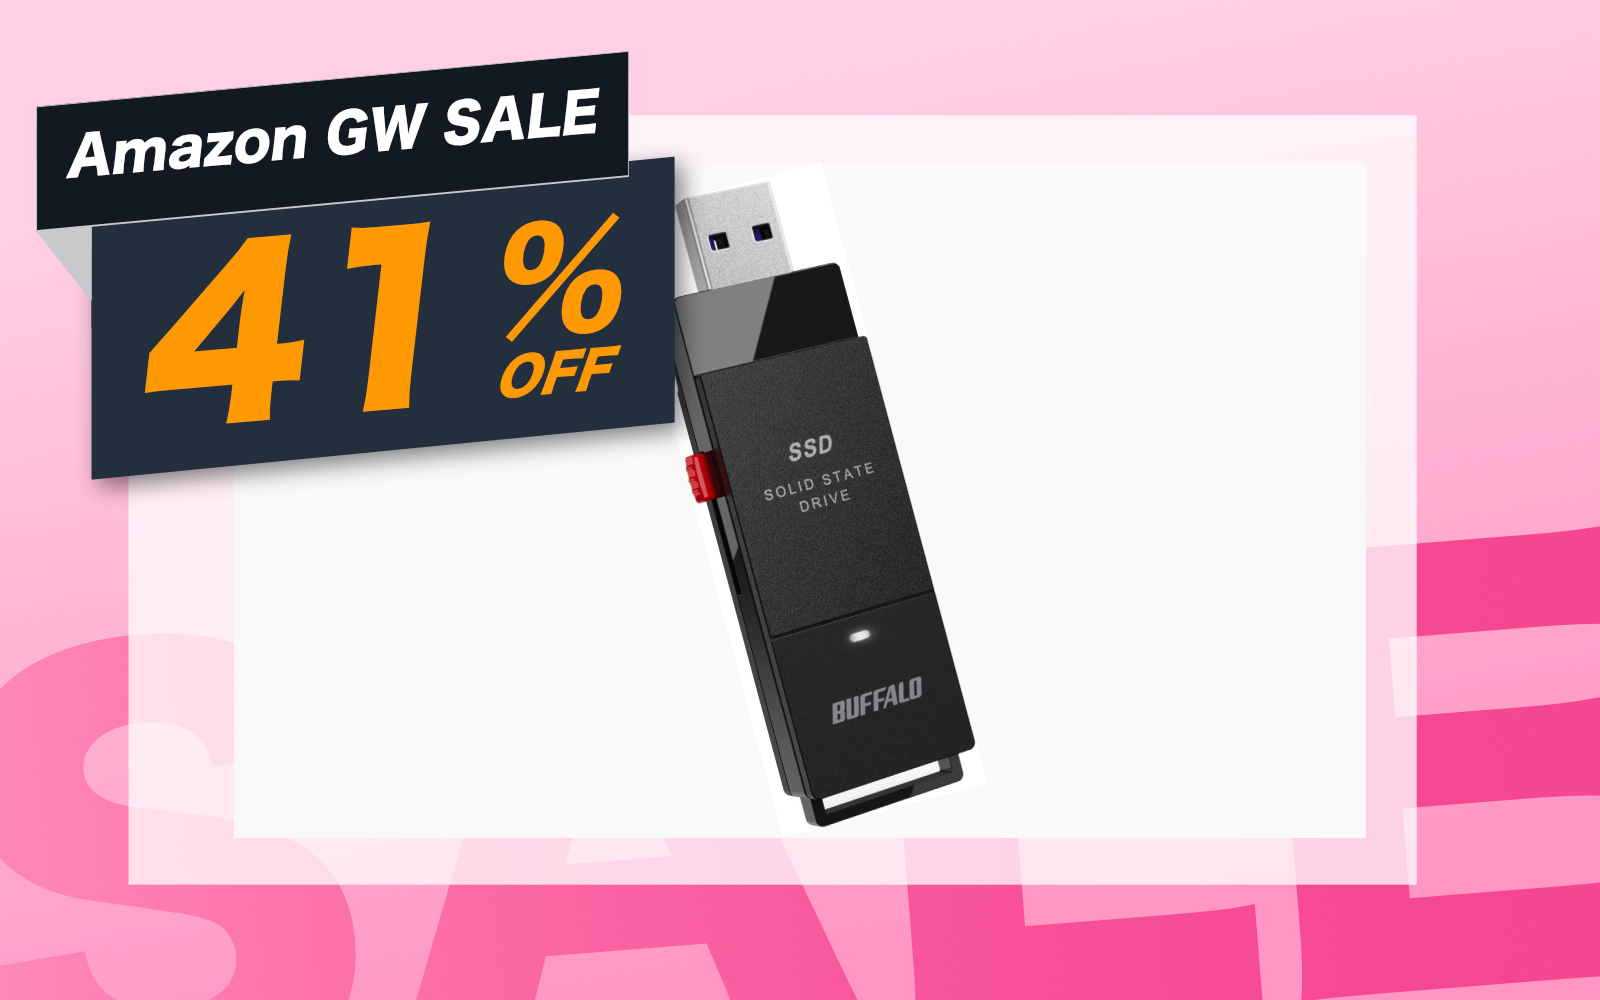 Buffalo SSD portable amazon gw sale